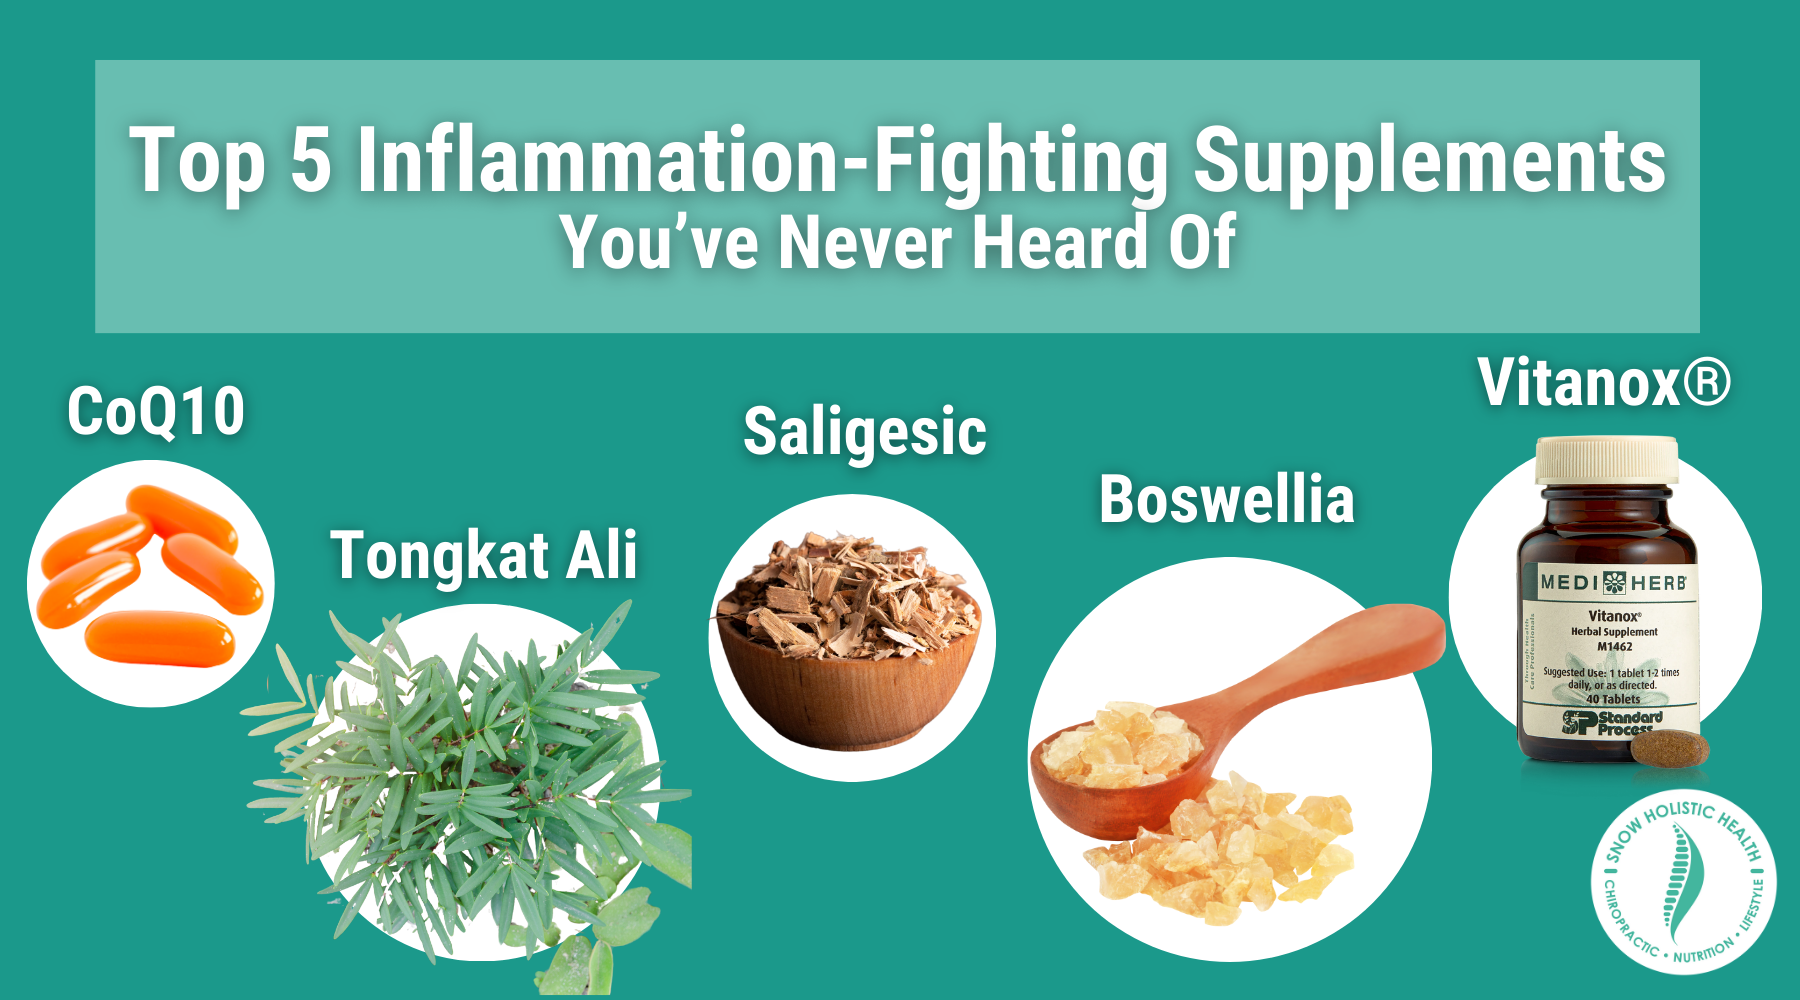 Top 5 inflammation-fighting supplements you've never heard of. coq10, tongkat ali, saligesic, boswellia, vitanox®  